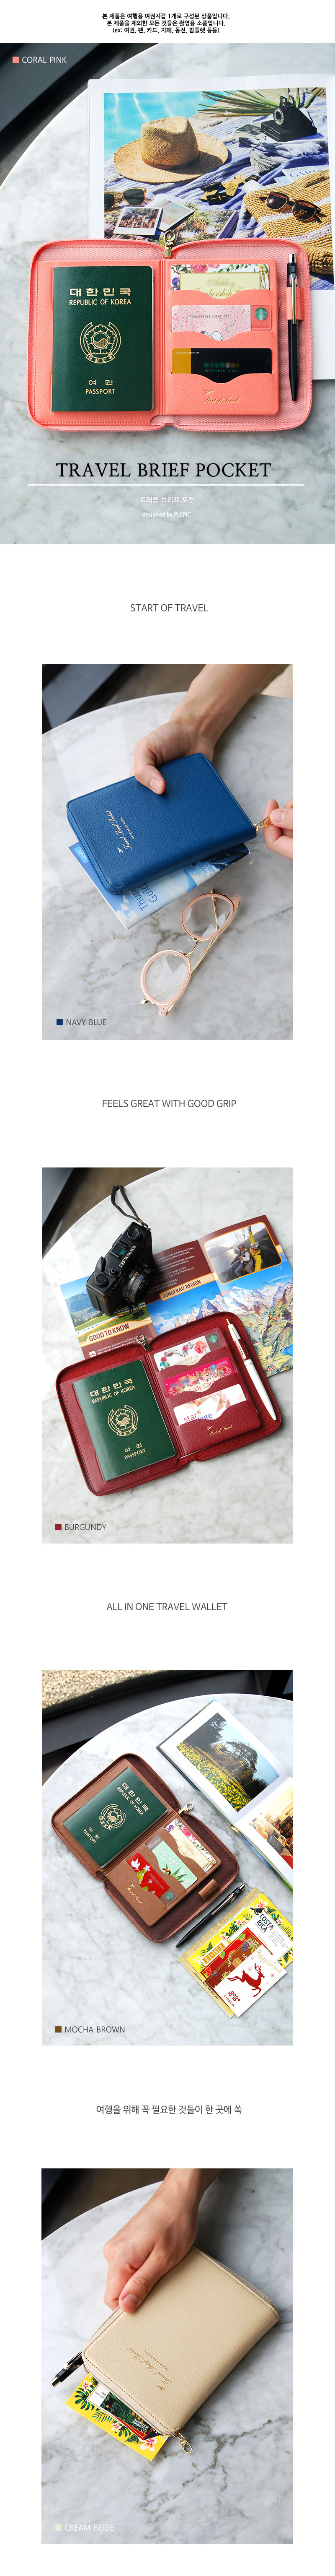 Travel Brief Pocket 25,500원 - 플레픽 여행/캠핑, 여권/네임택, 여권케이스, 파우치형 케이스 바보사랑 Travel Brief Pocket 25,500원 - 플레픽 여행/캠핑, 여권/네임택, 여권케이스, 파우치형 케이스 바보사랑